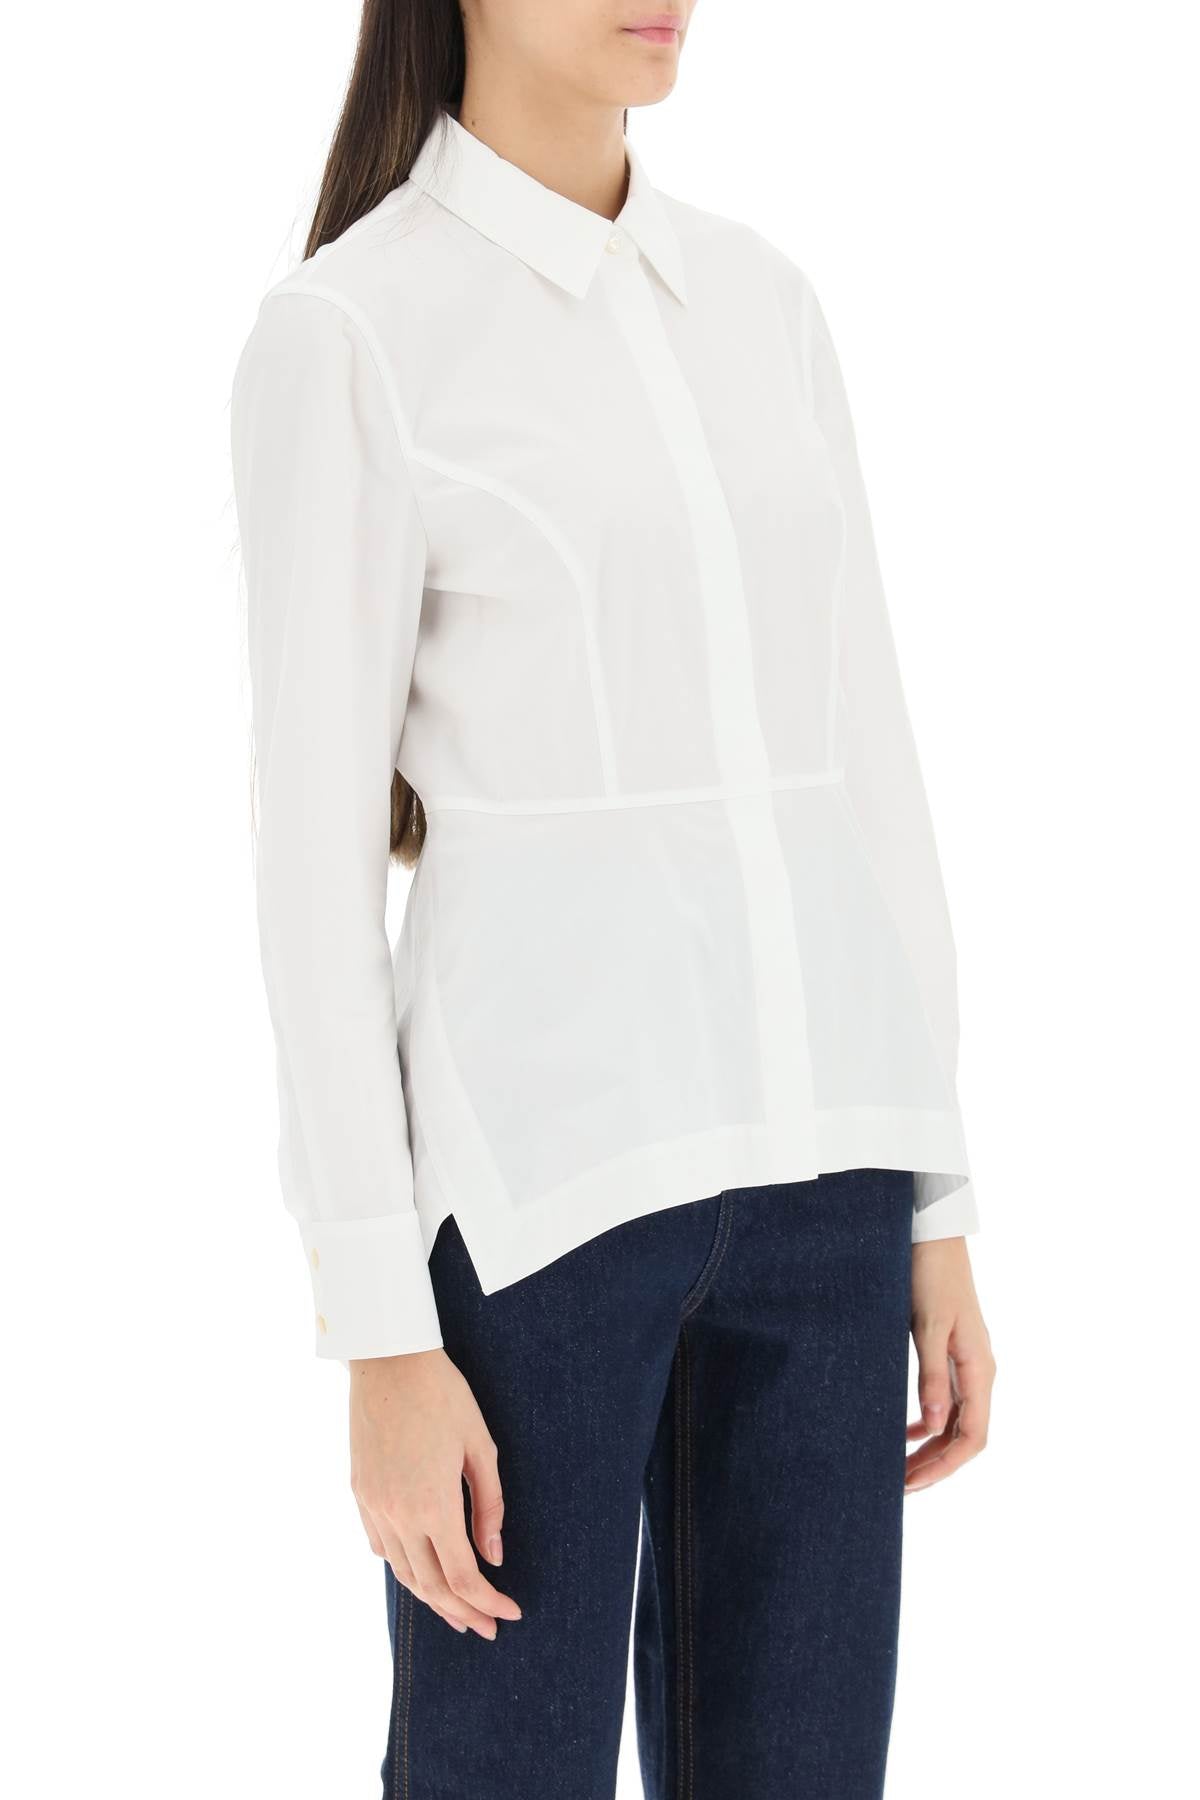 TORY BURCH Asymmetrical Cotton Poplin Shirt for Women - SS23 Collection